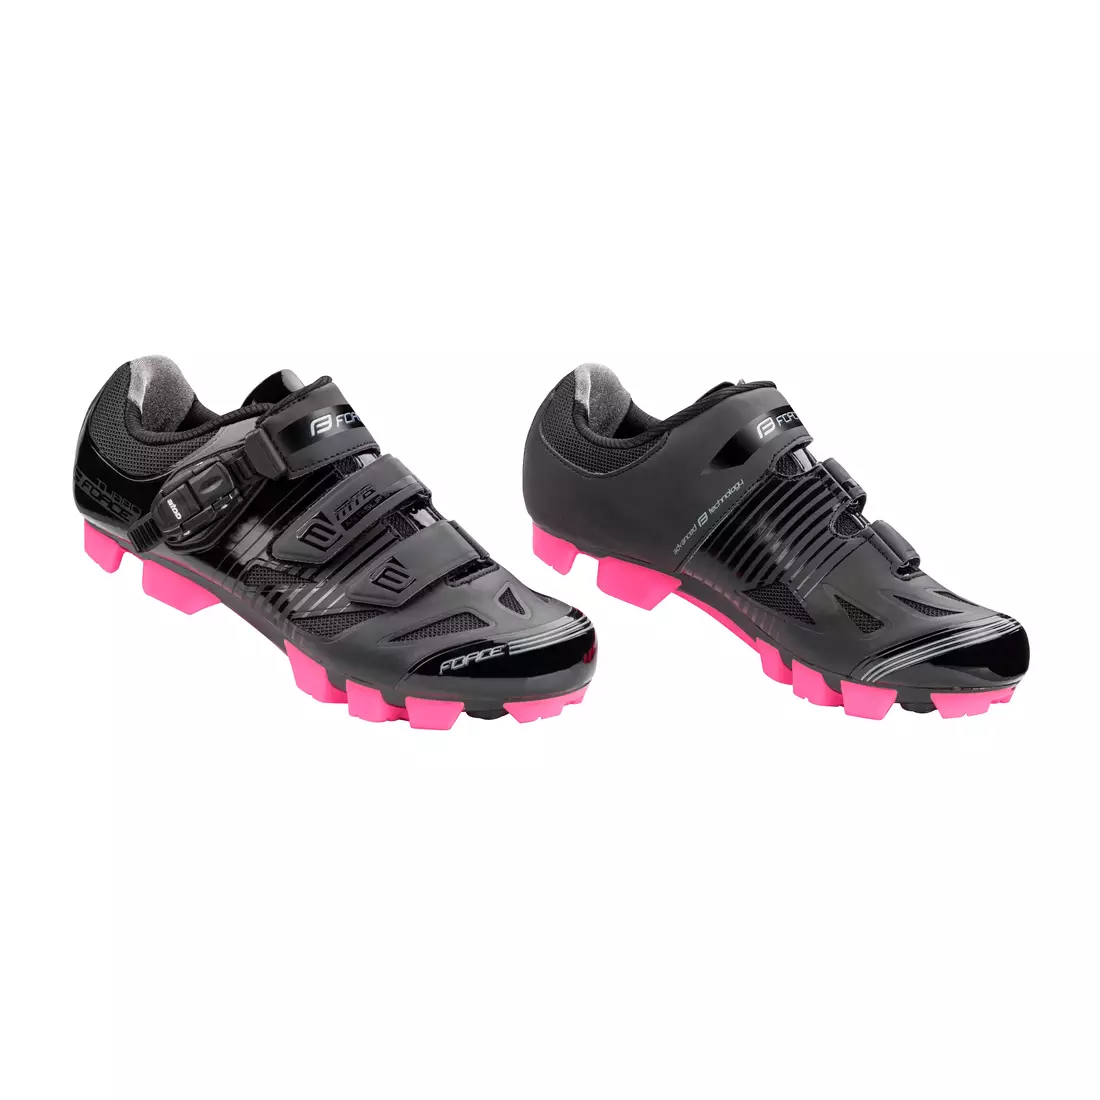 FORCE women's cycling shoes MTB TURBO black/pink 9407735